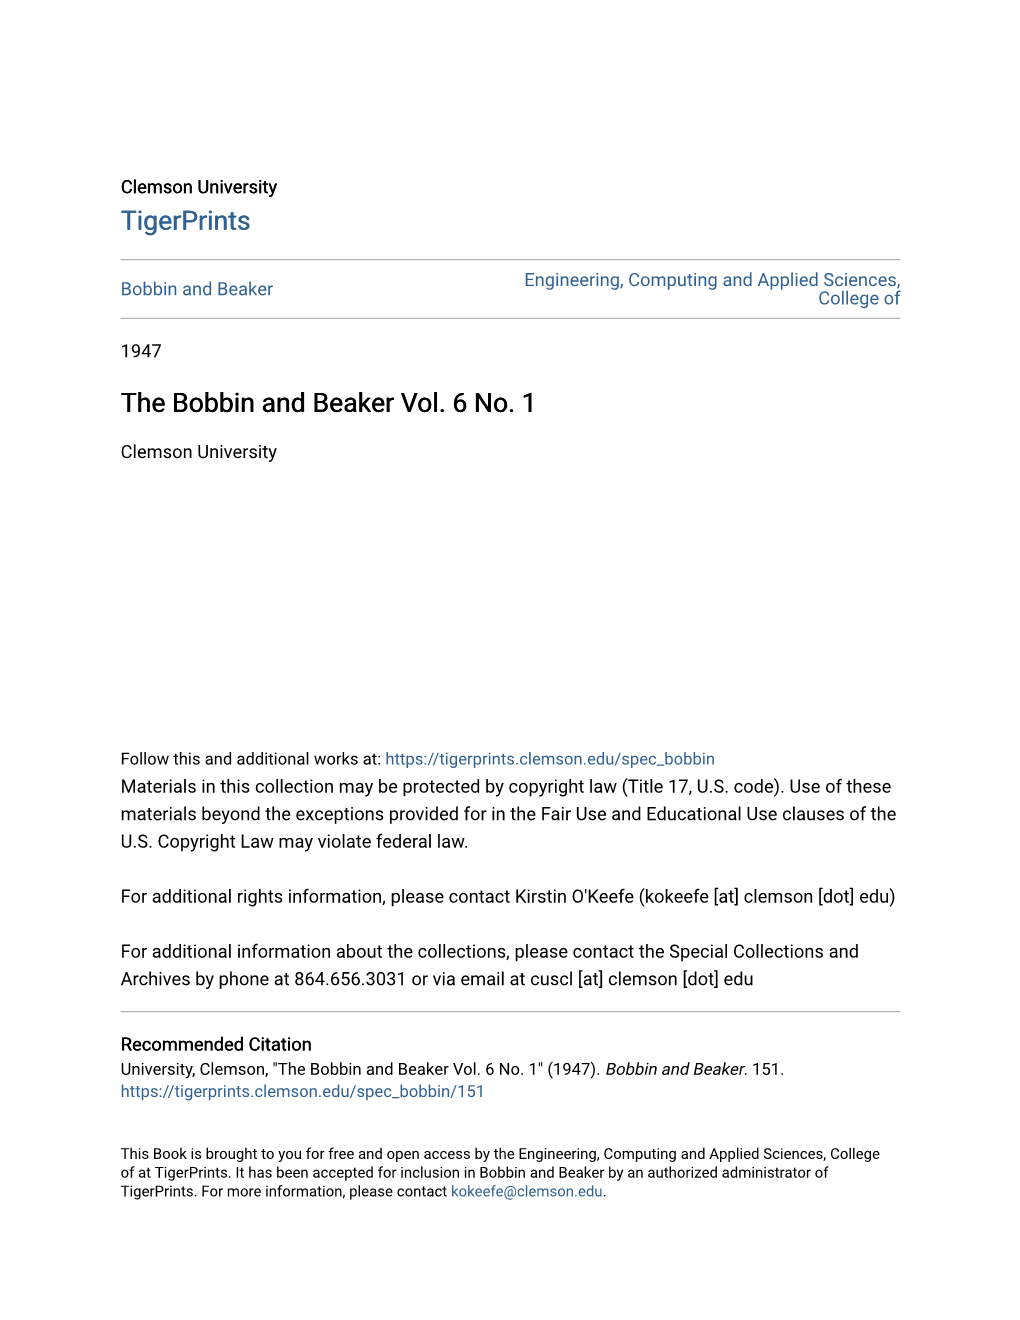 The Bobbin and Beaker Vol. 6 No. 1